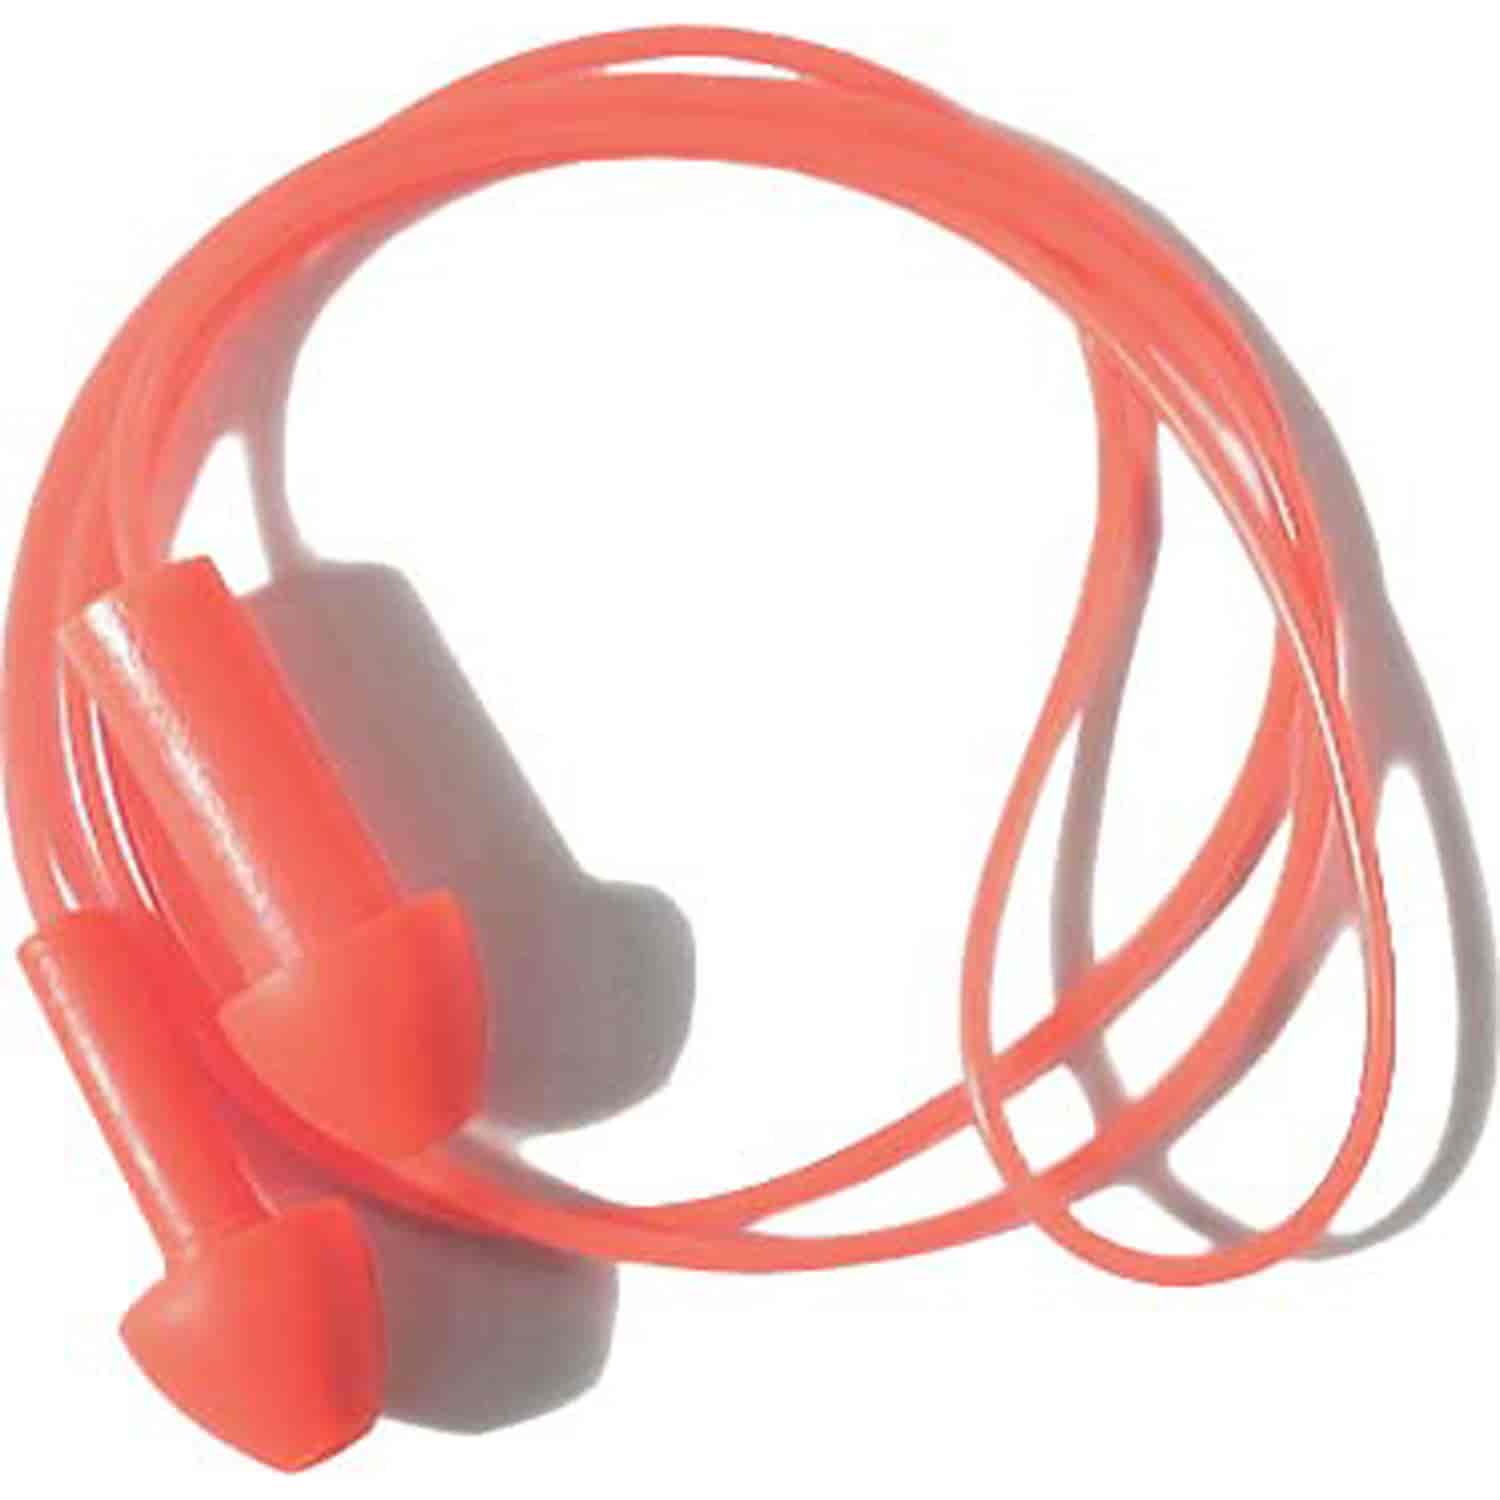 Reusable Corded Ear Plugs